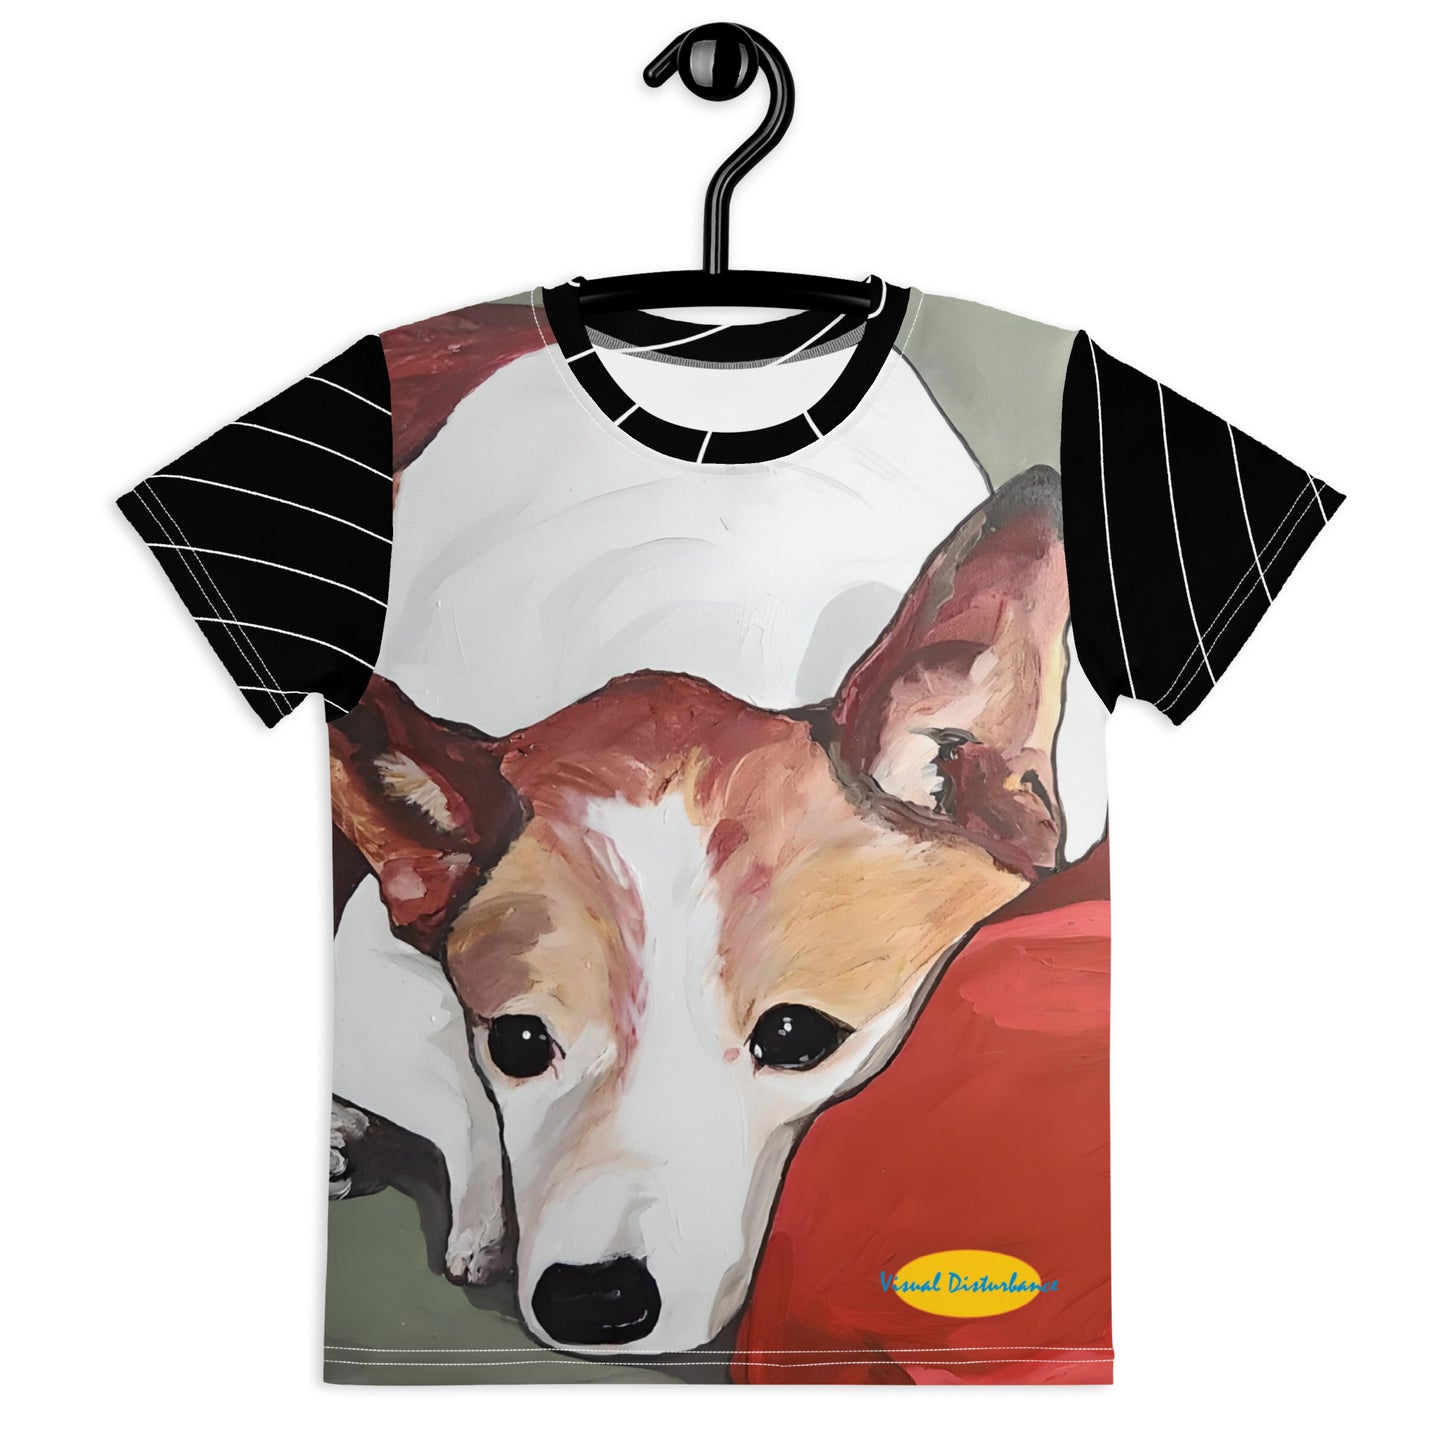 Contented Dog Kids crew neck t-shirt